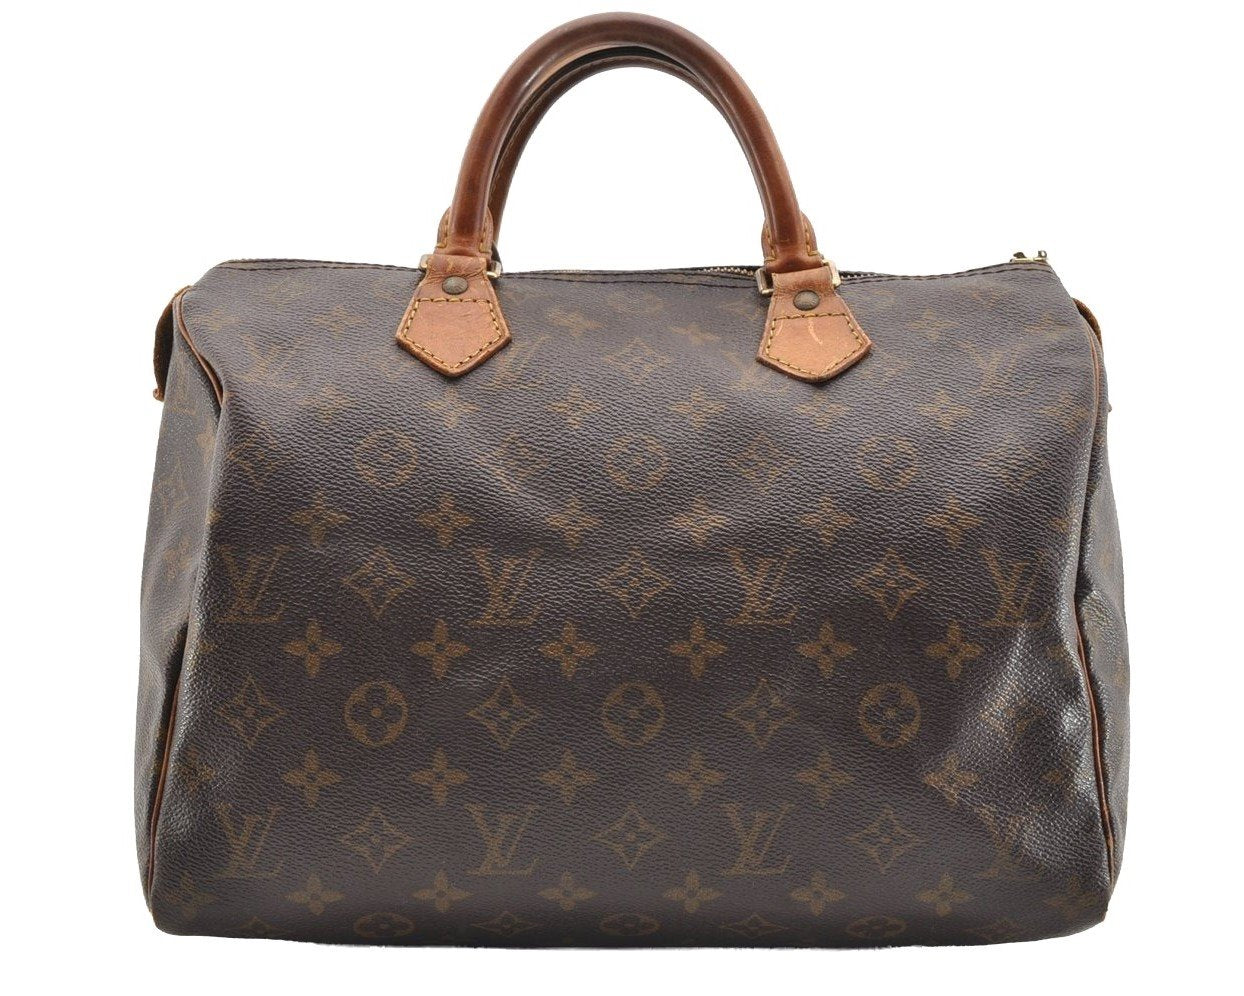 Authentic Louis Vuitton Monogram Speedy 30 Hand Boston Bag M41526 LV Junk 6937I